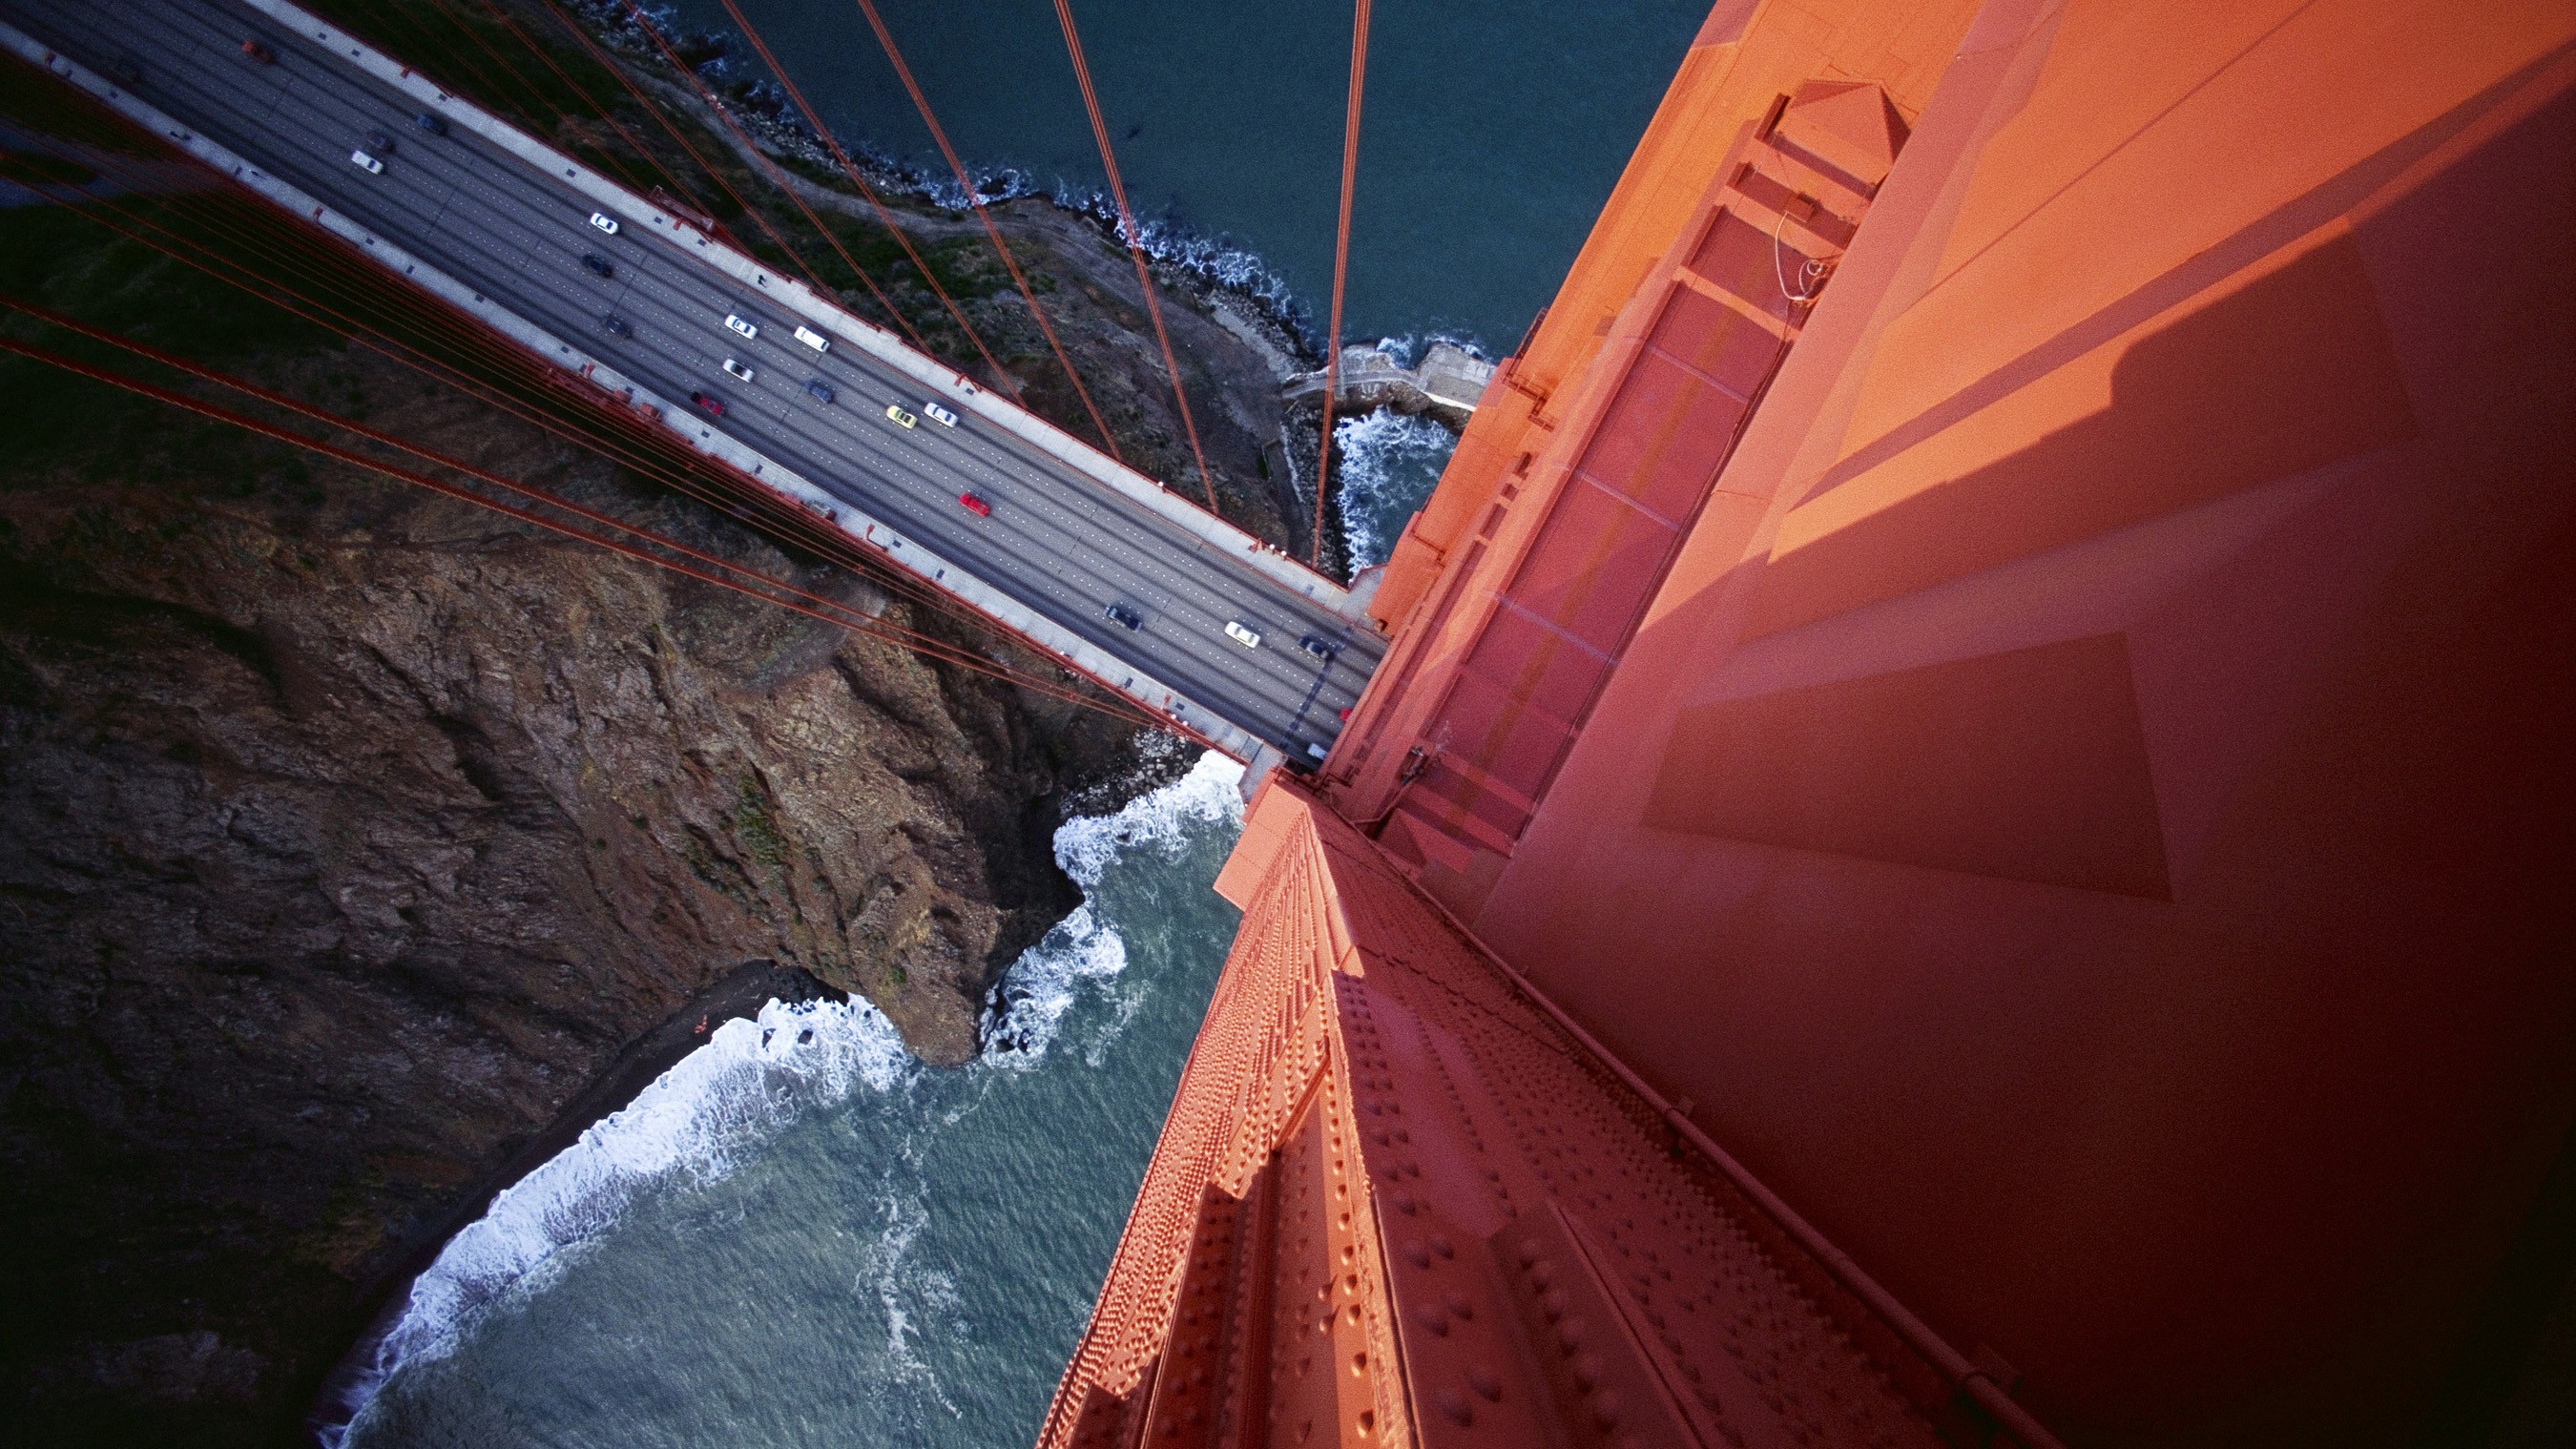 Download mobile wallpaper Golden Gate, Bridges, Man Made for free.